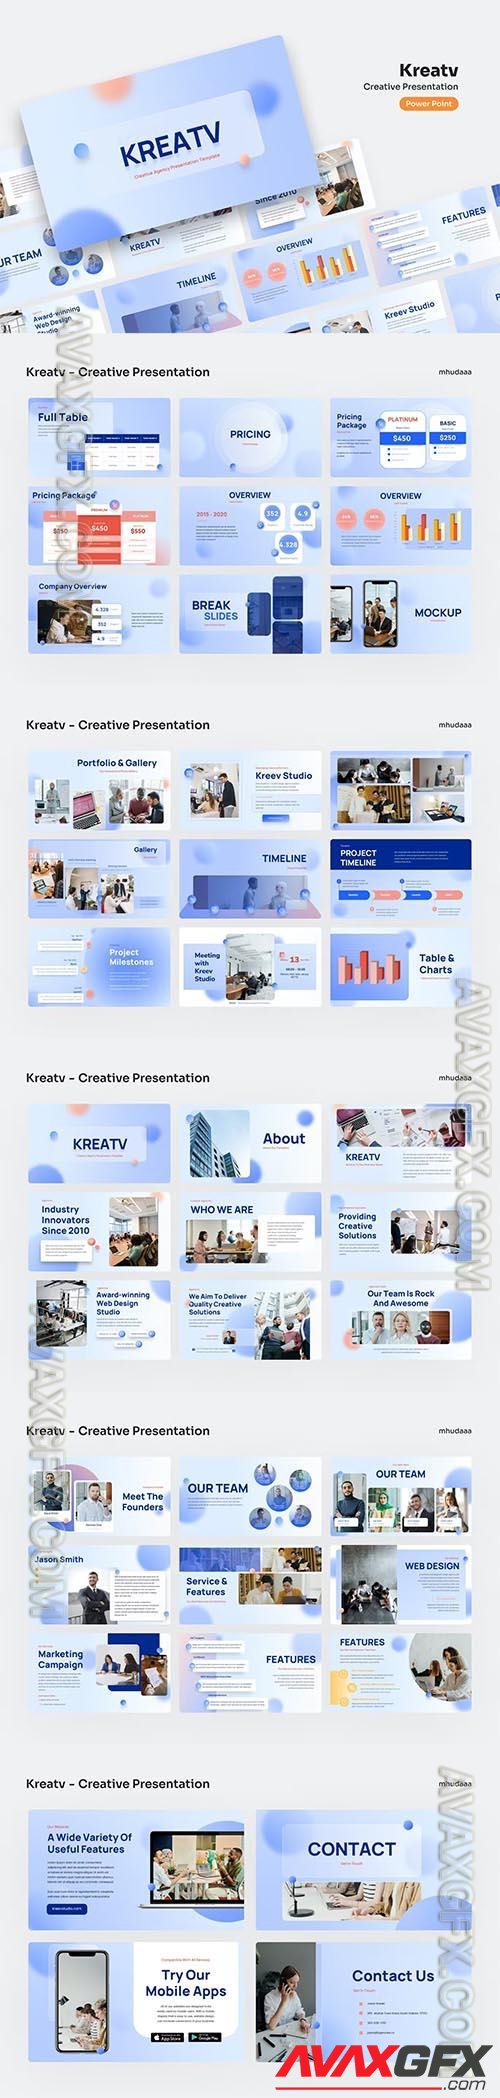 Kreatv - Creative PowerPoint Presentation KMEXNU5